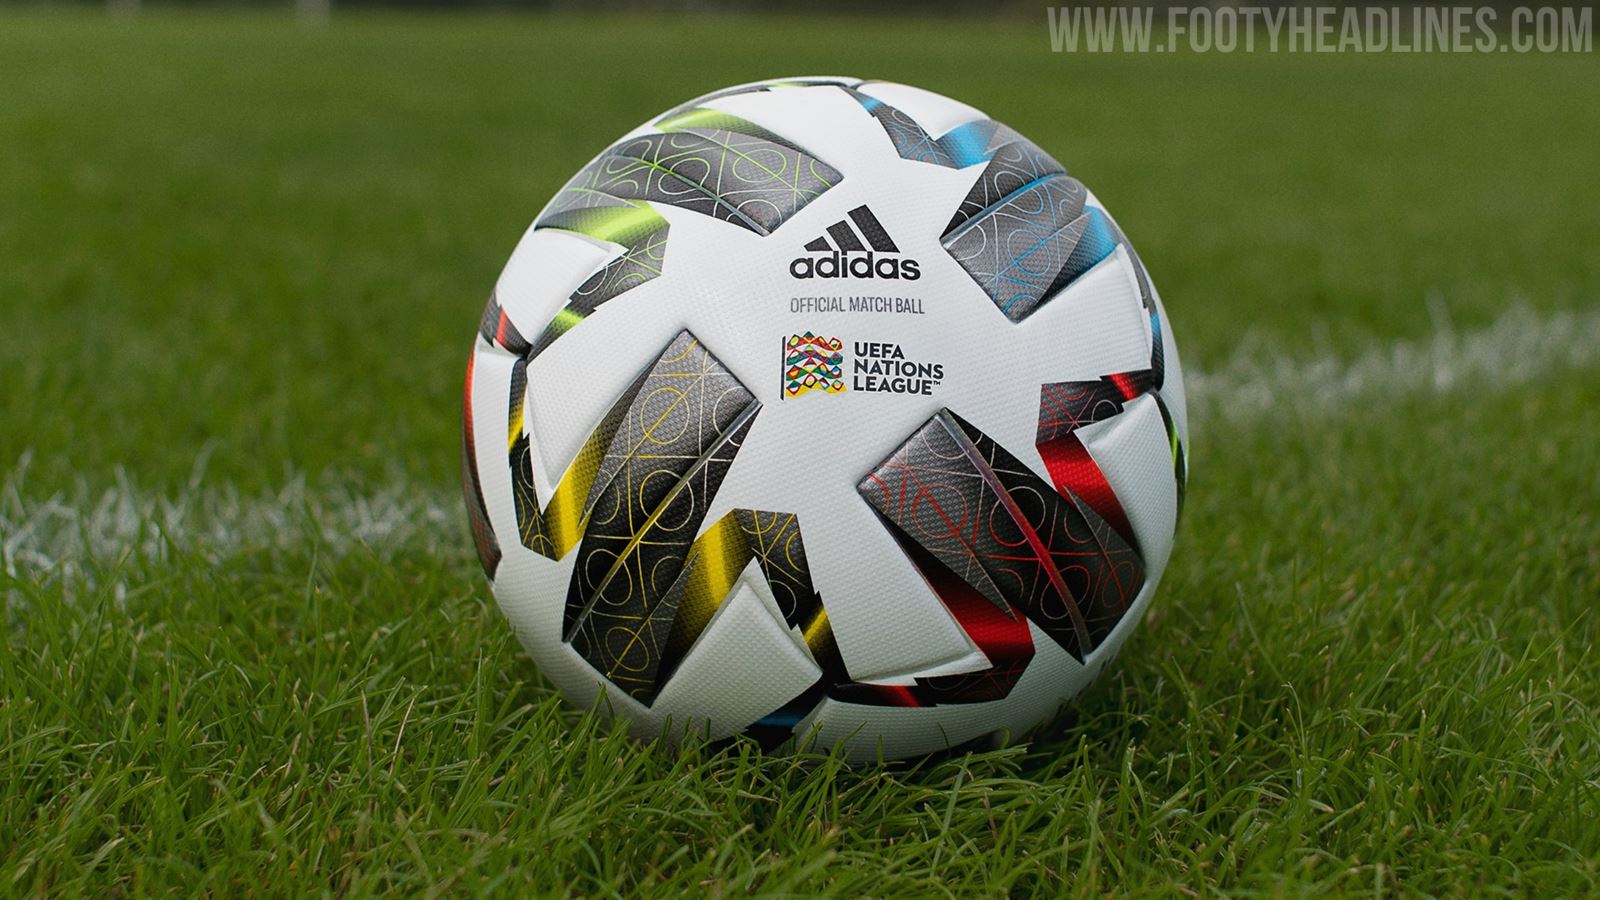 Adidas UEFA Nations League 2020-2021 Ball Released - Footy Headlines